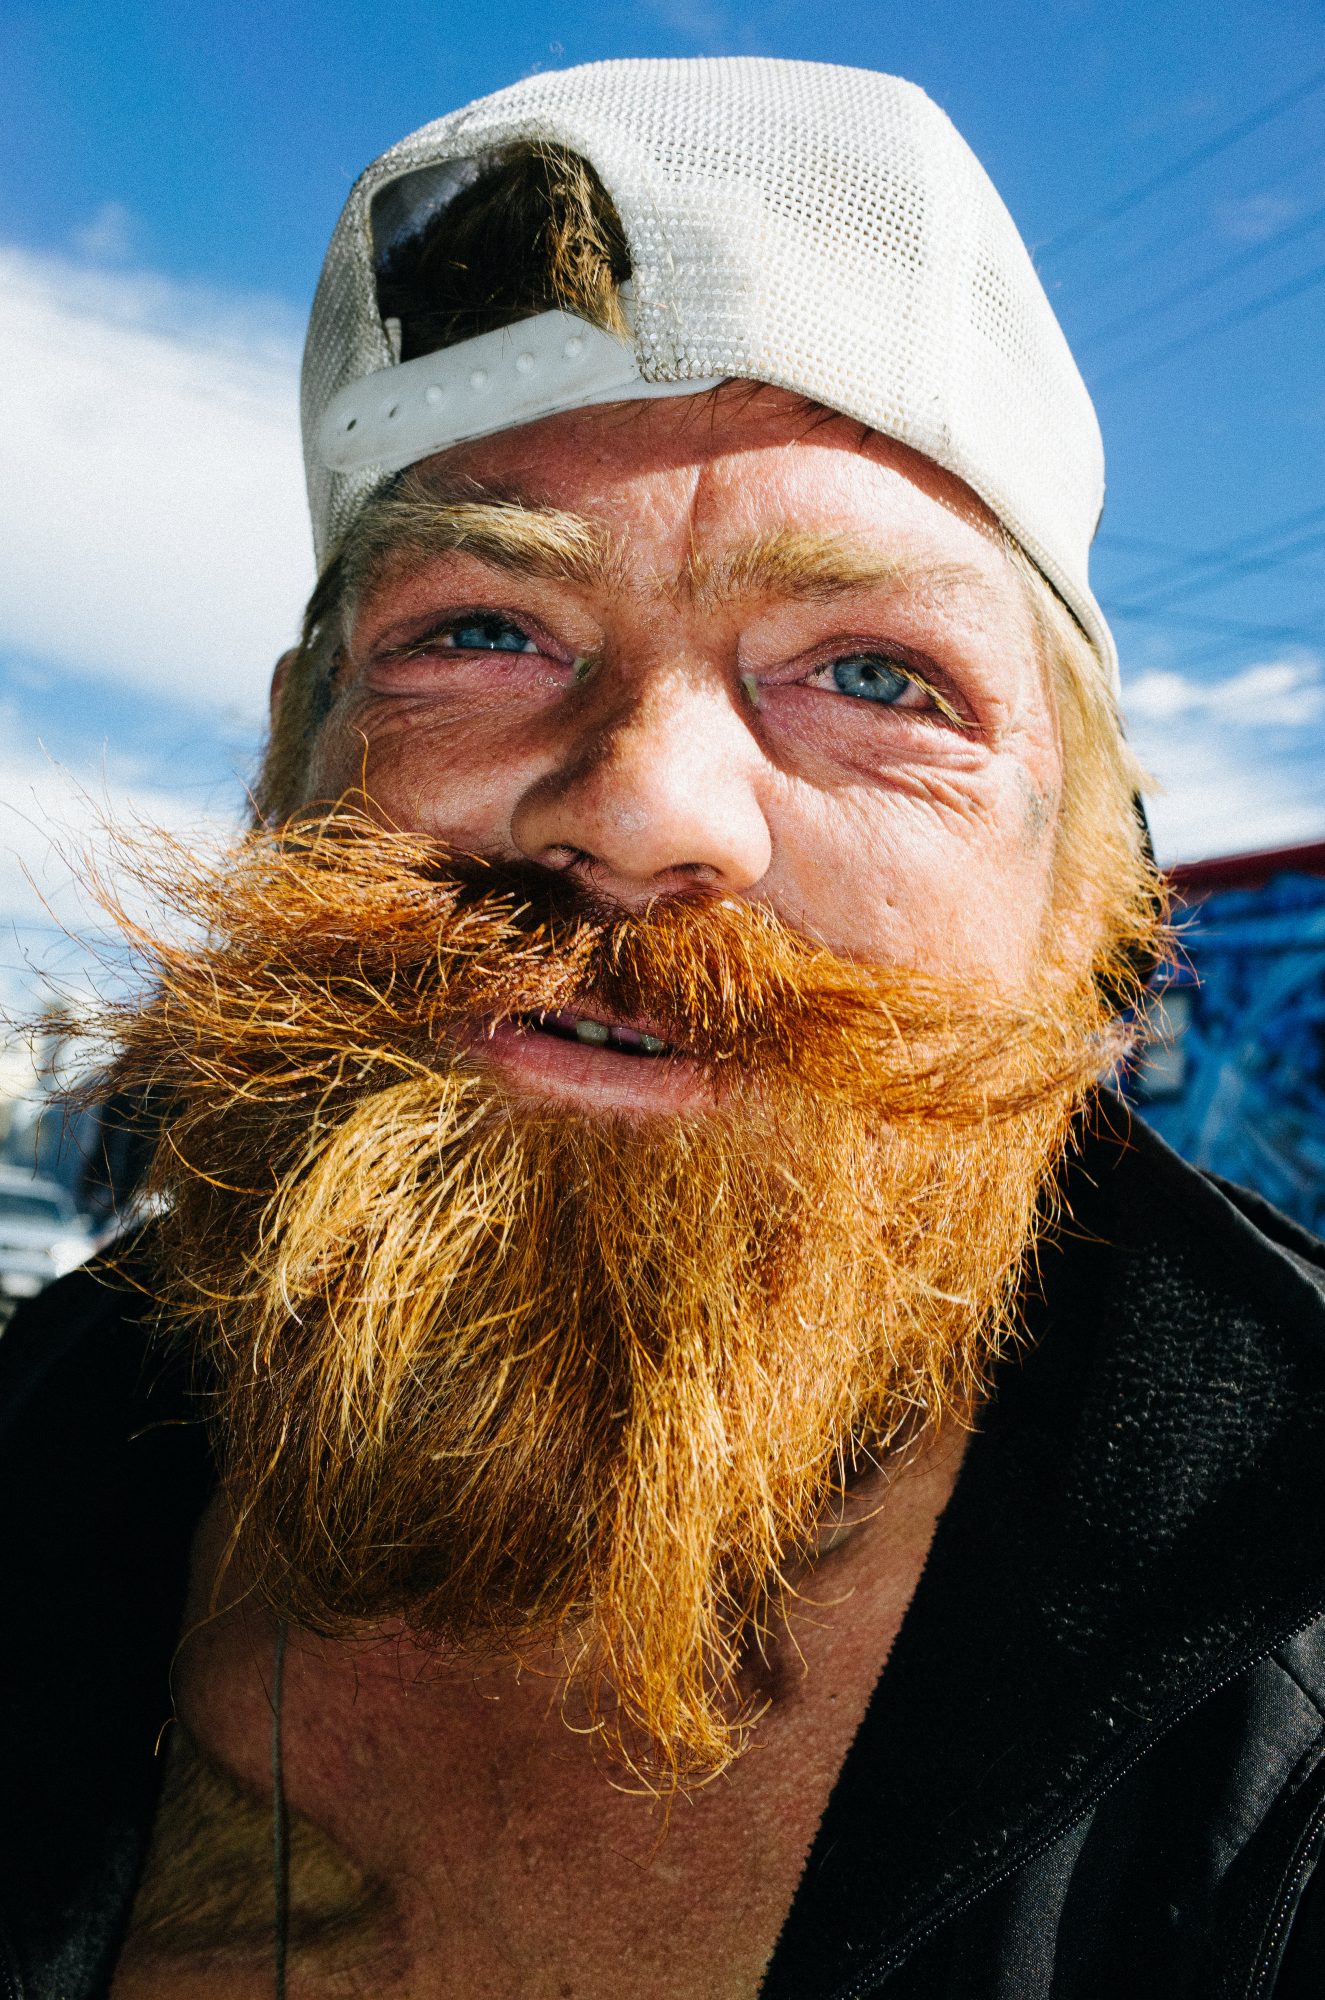 eric-kim-street-photography-street-portraits-3-orange-beard-sf-mission